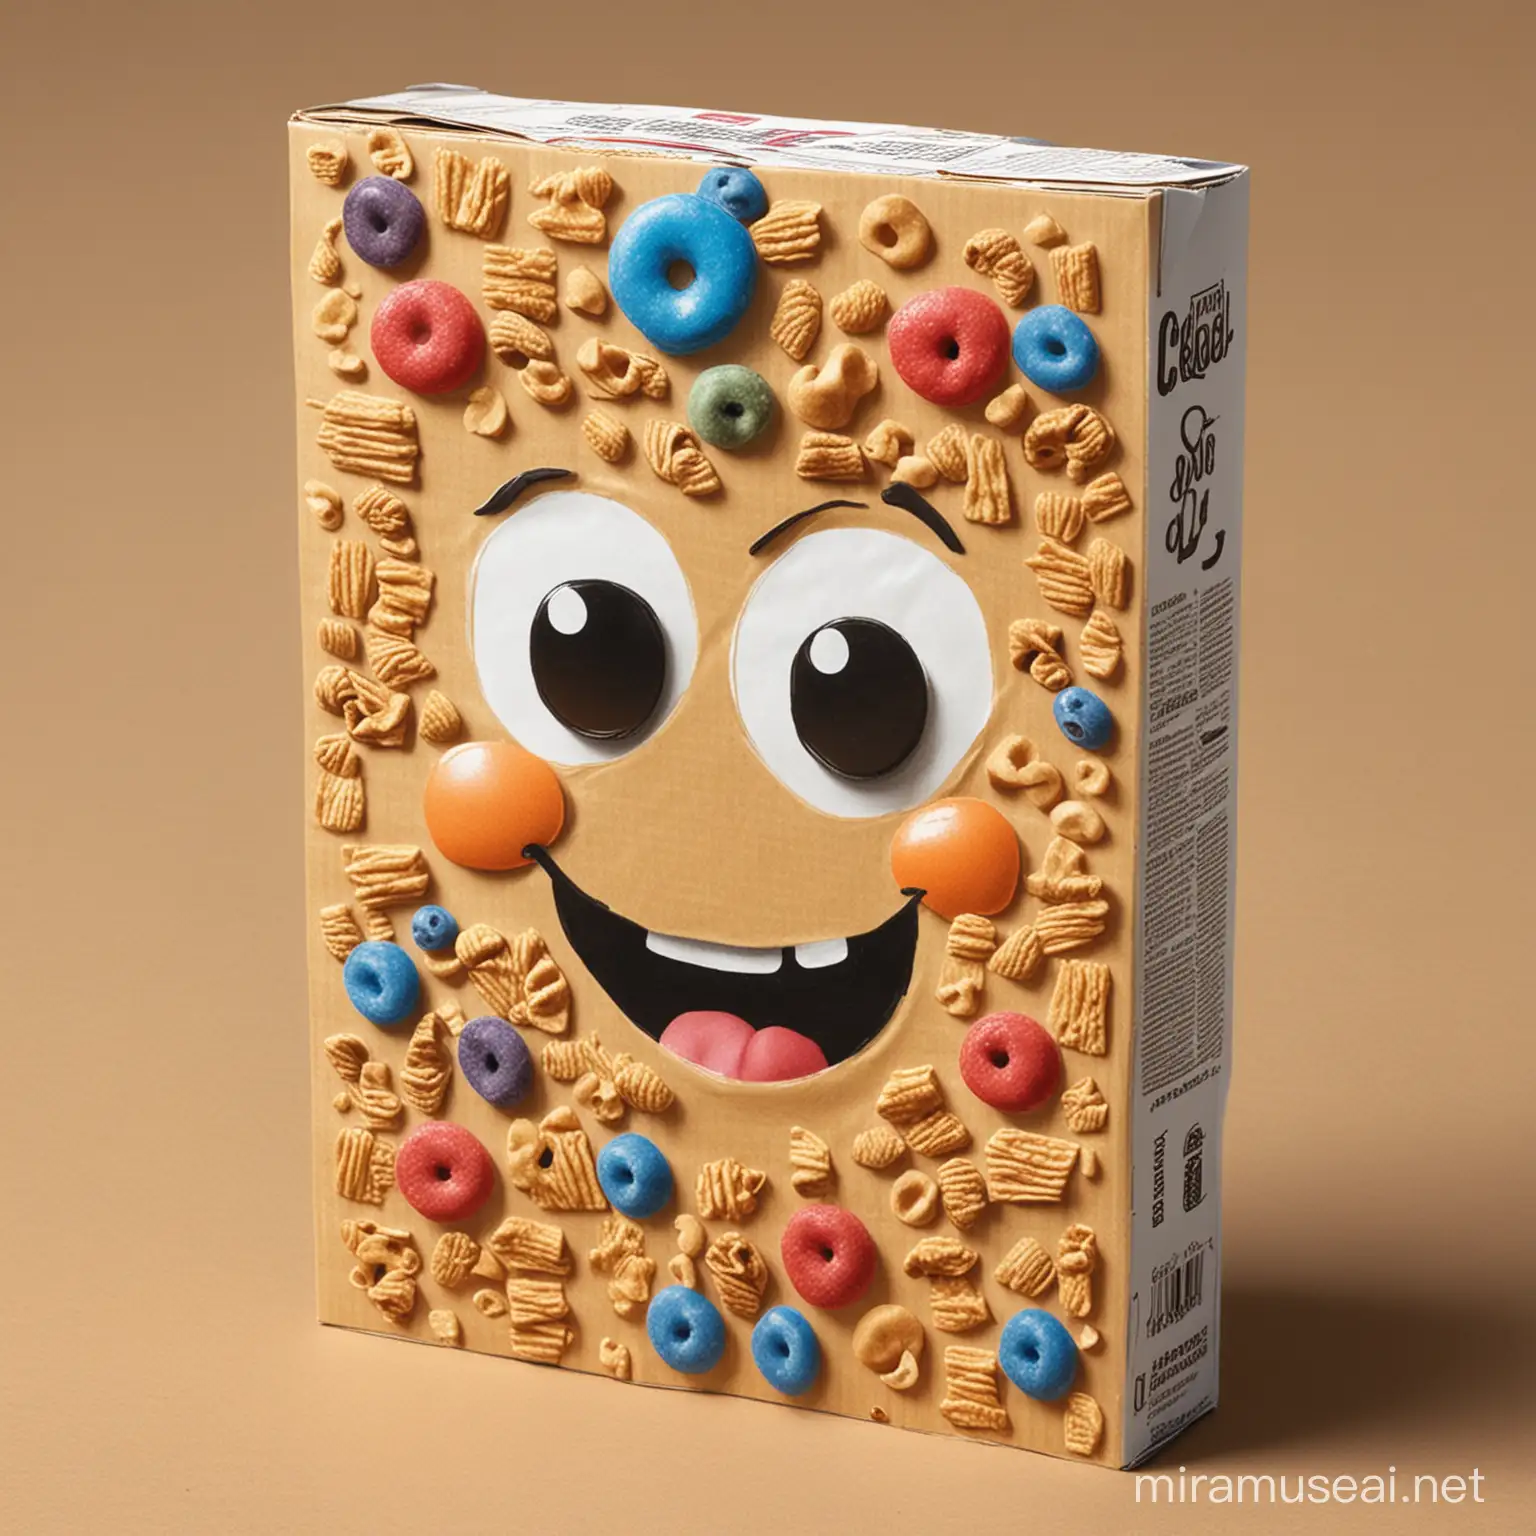 Original and Creative Cereal Box Cover Design for Art Class